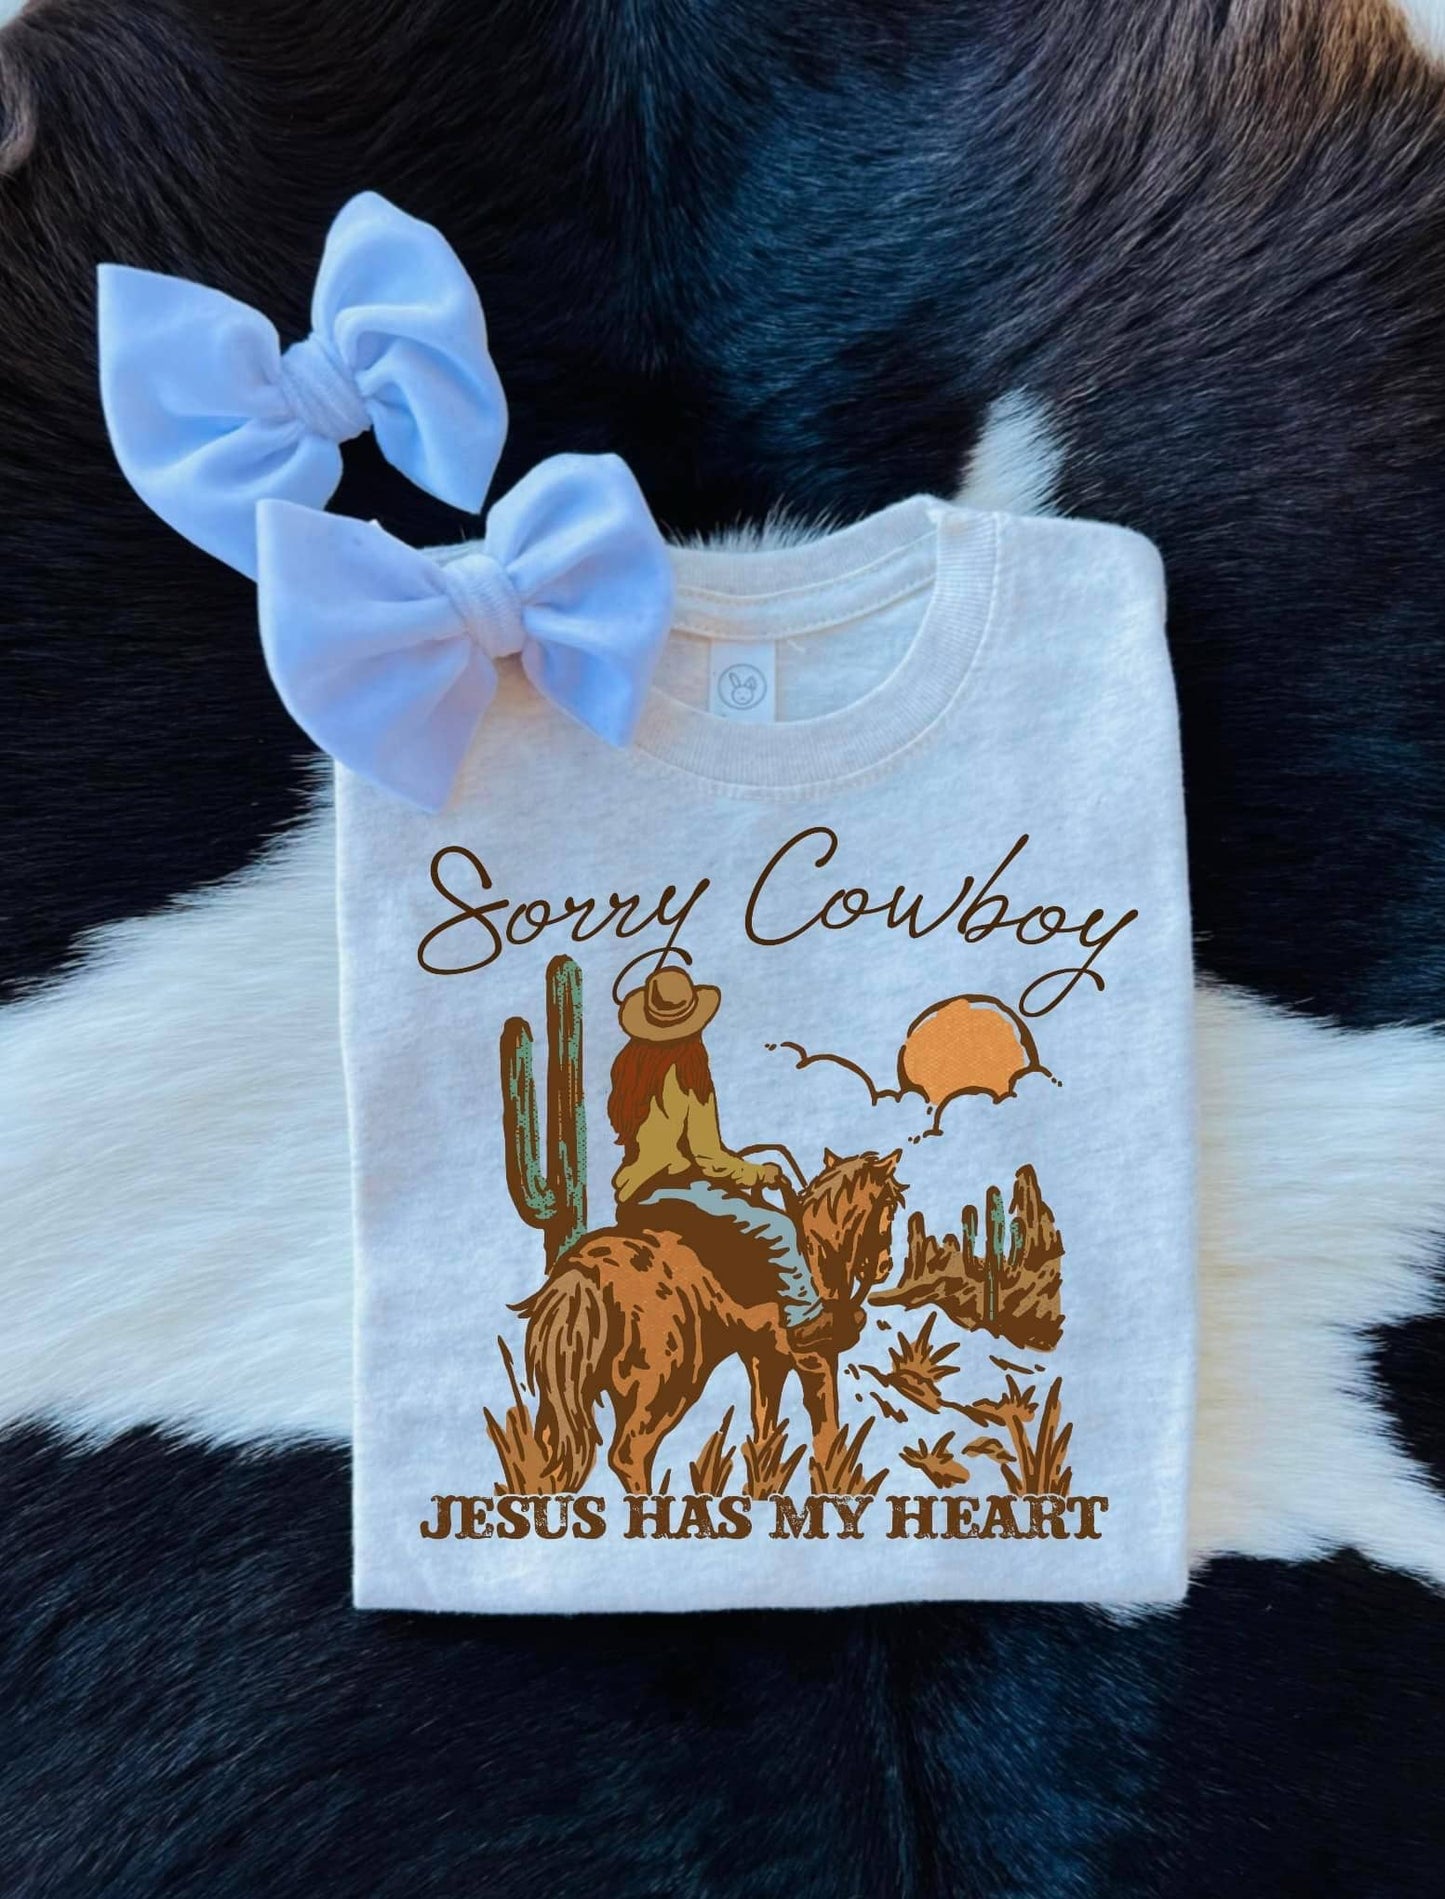 Sorry cowboy Jesus has my heart